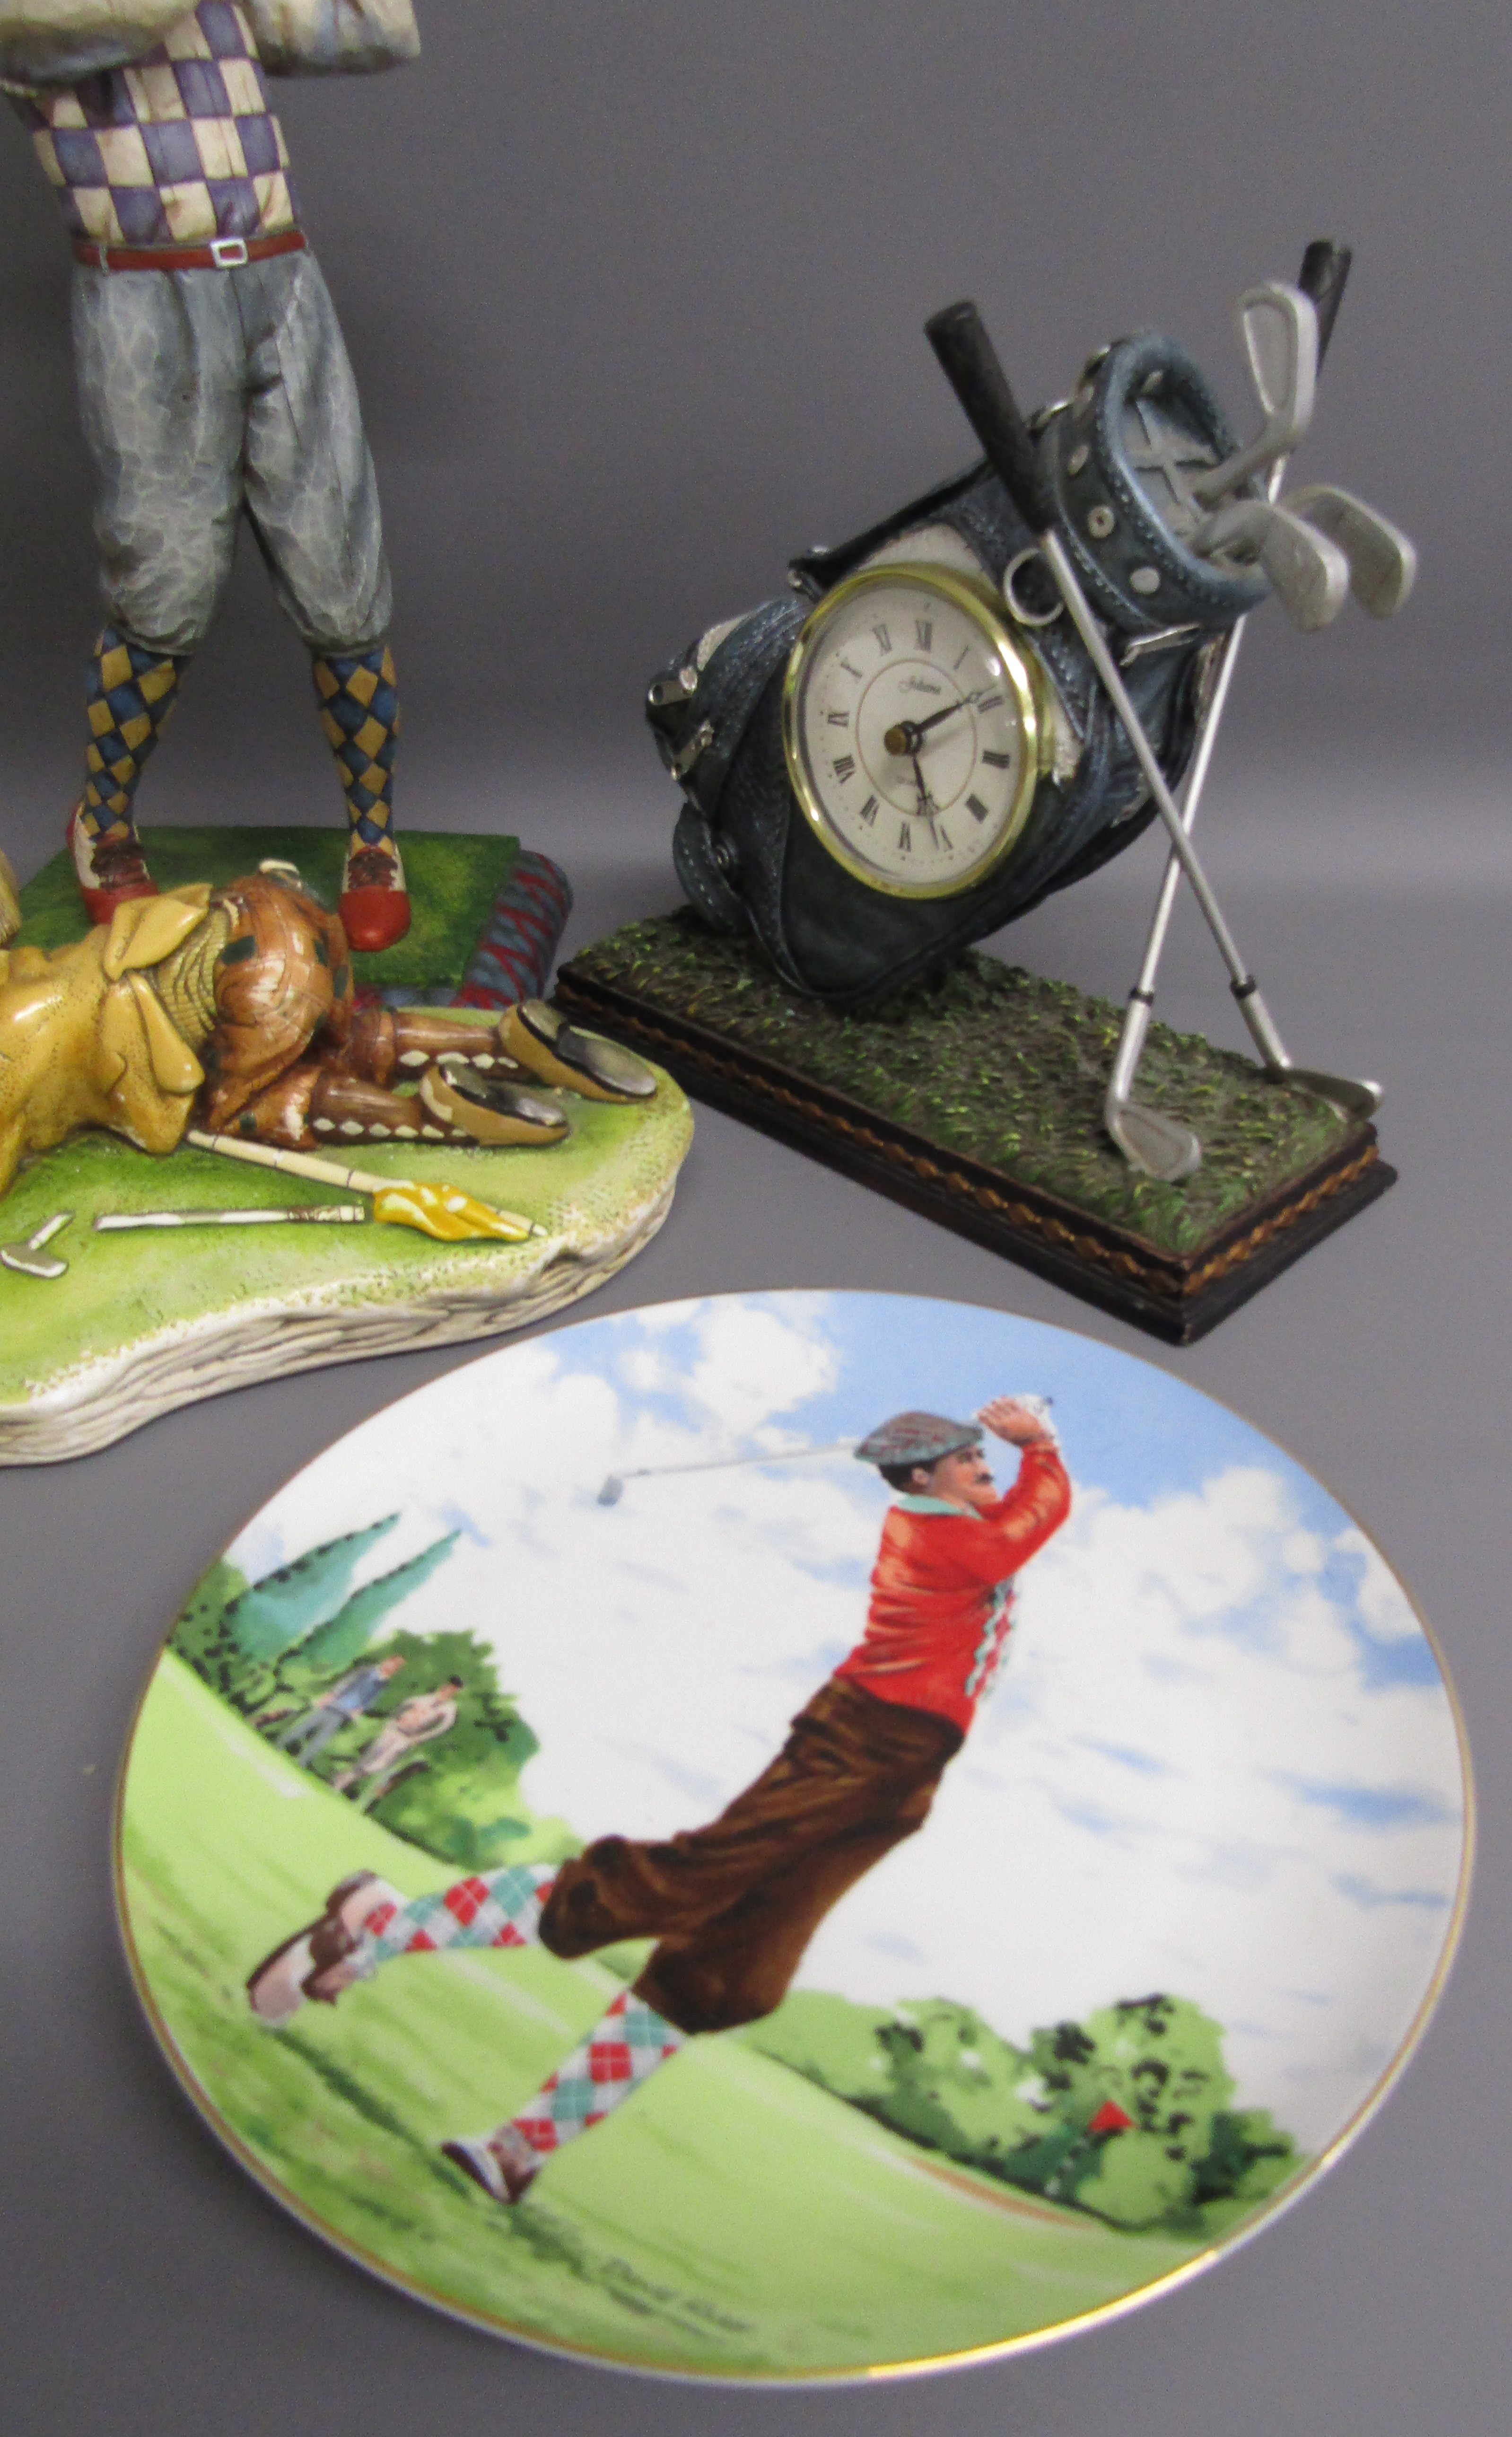 Golfing figures includes Naturecraft, Heartwood Creek, Juliana golf bag clock, David Fisher design - Image 4 of 4